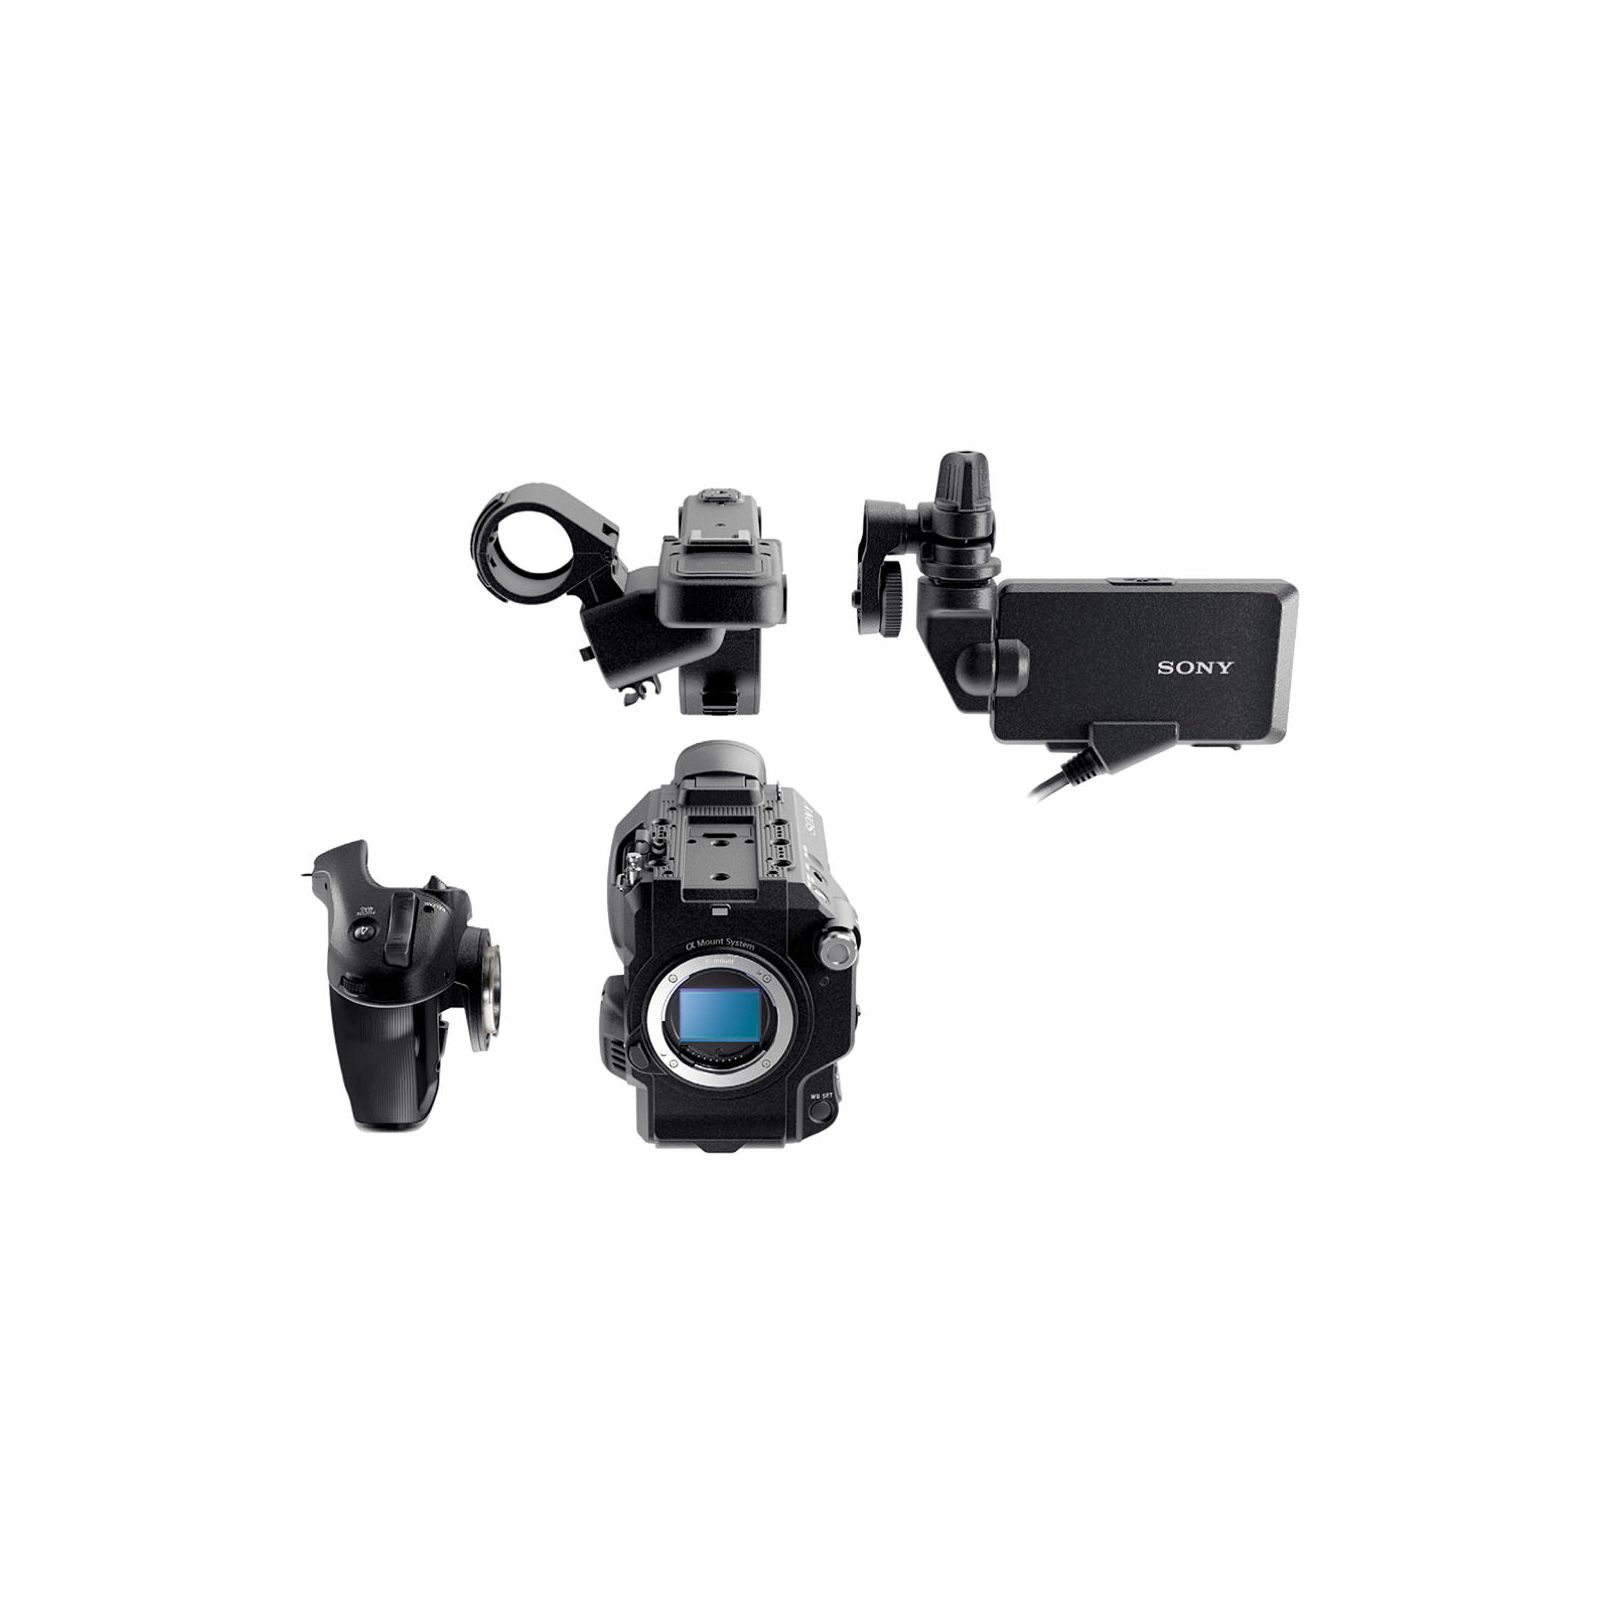 Sony PXW-FS5 XDCAM Super 35 Camera System with Zoom Lens 18-105mm objektiv